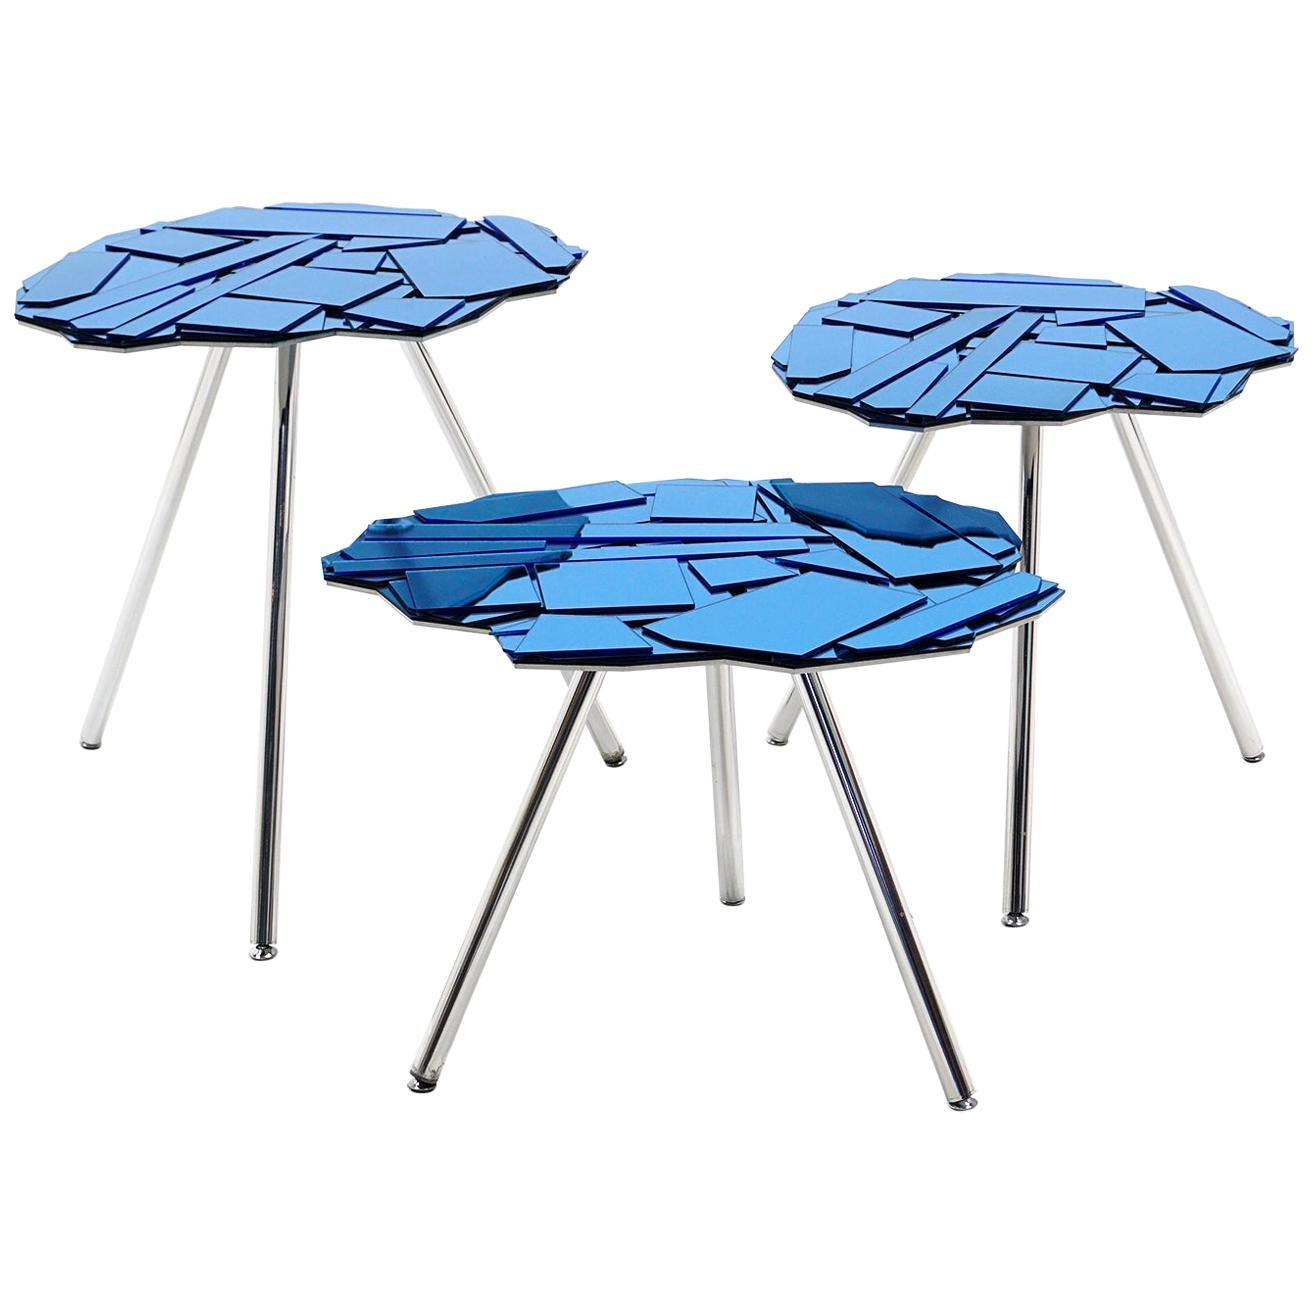 Brasilia Nesting Tables, Drei, von The Campana Brothers, Blaue Glasplatten, Chrom